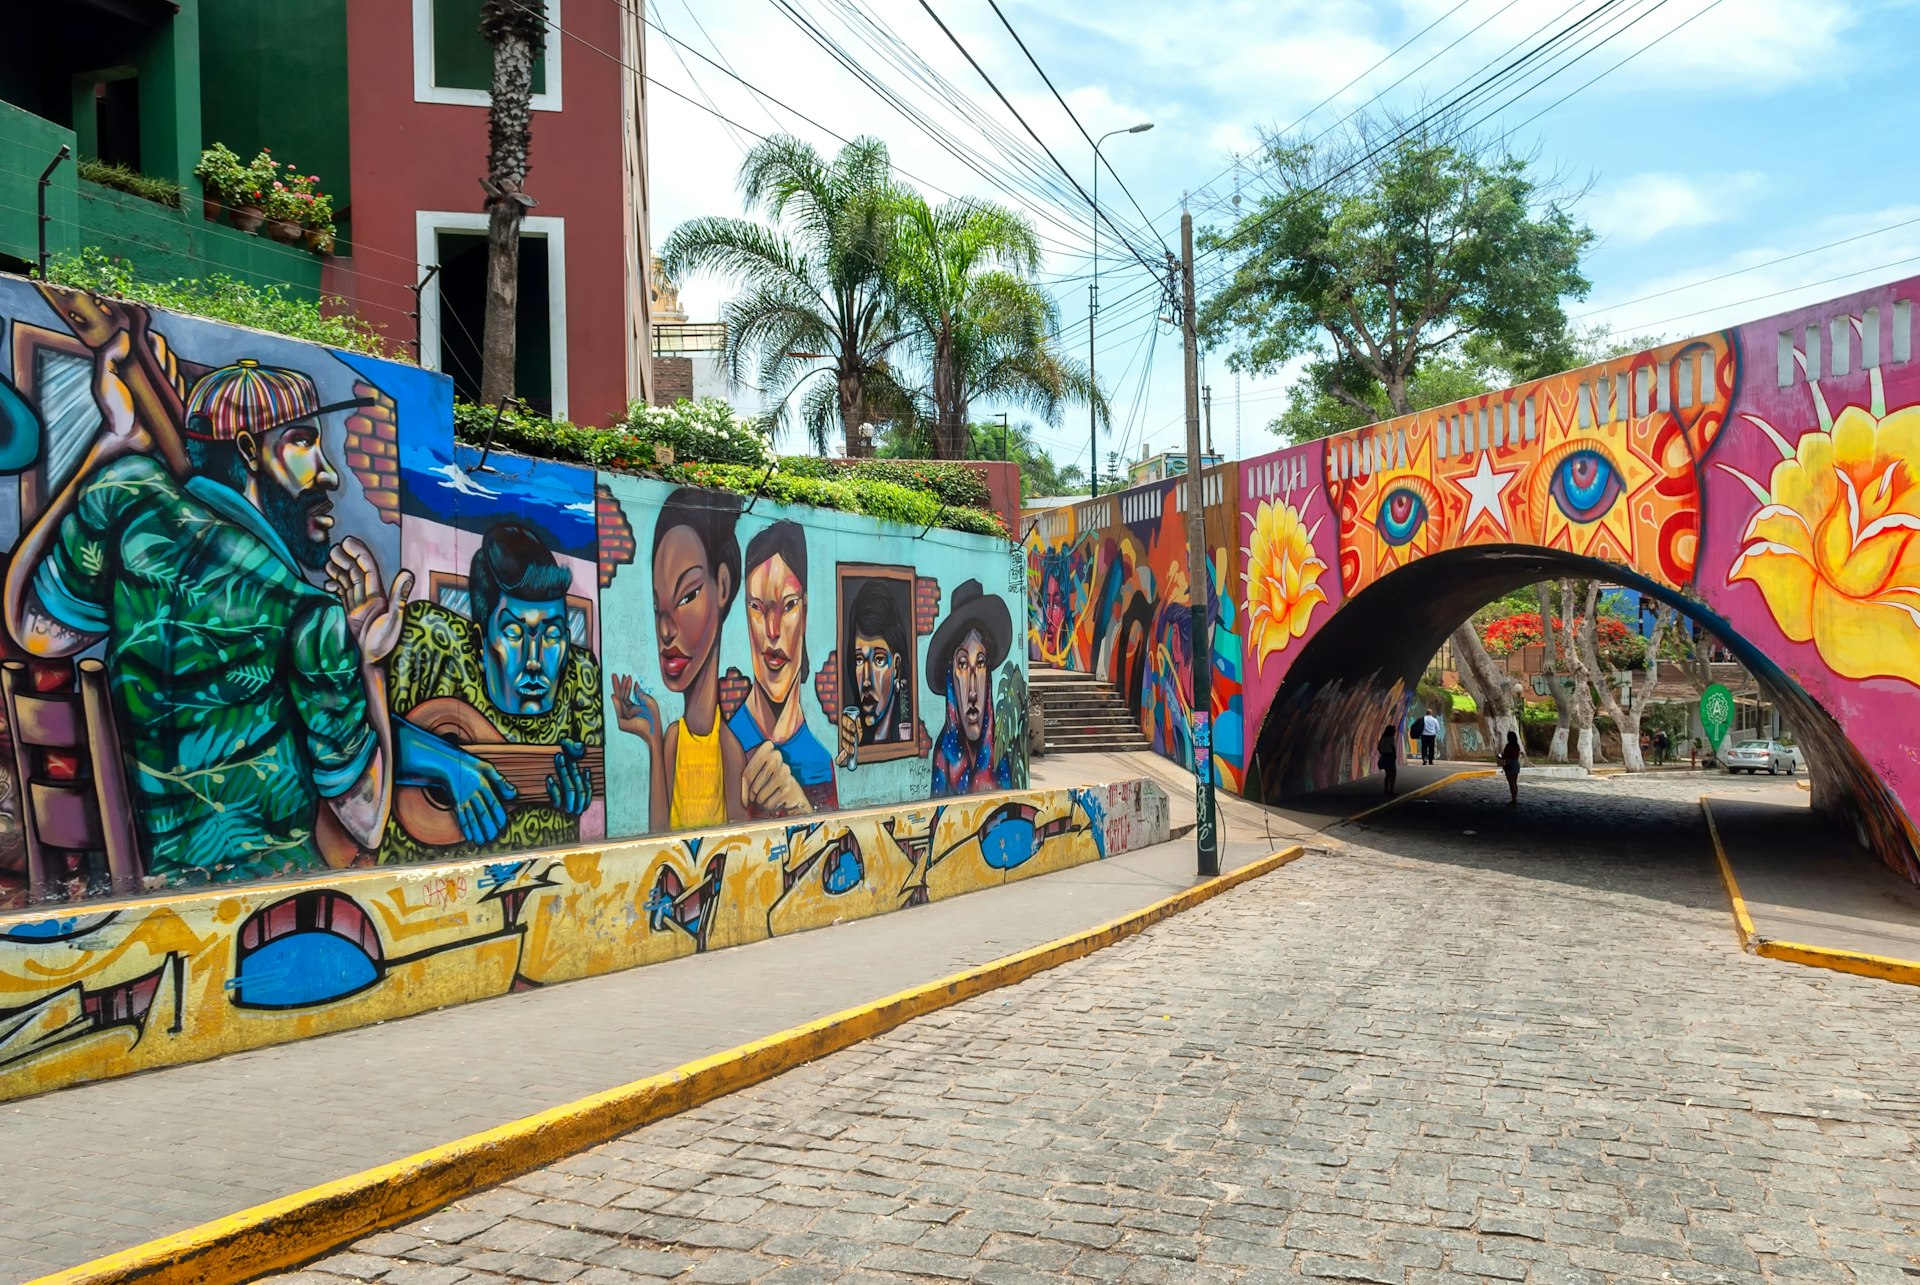 Street art in the Barranco neighborhood of Lima, Peru